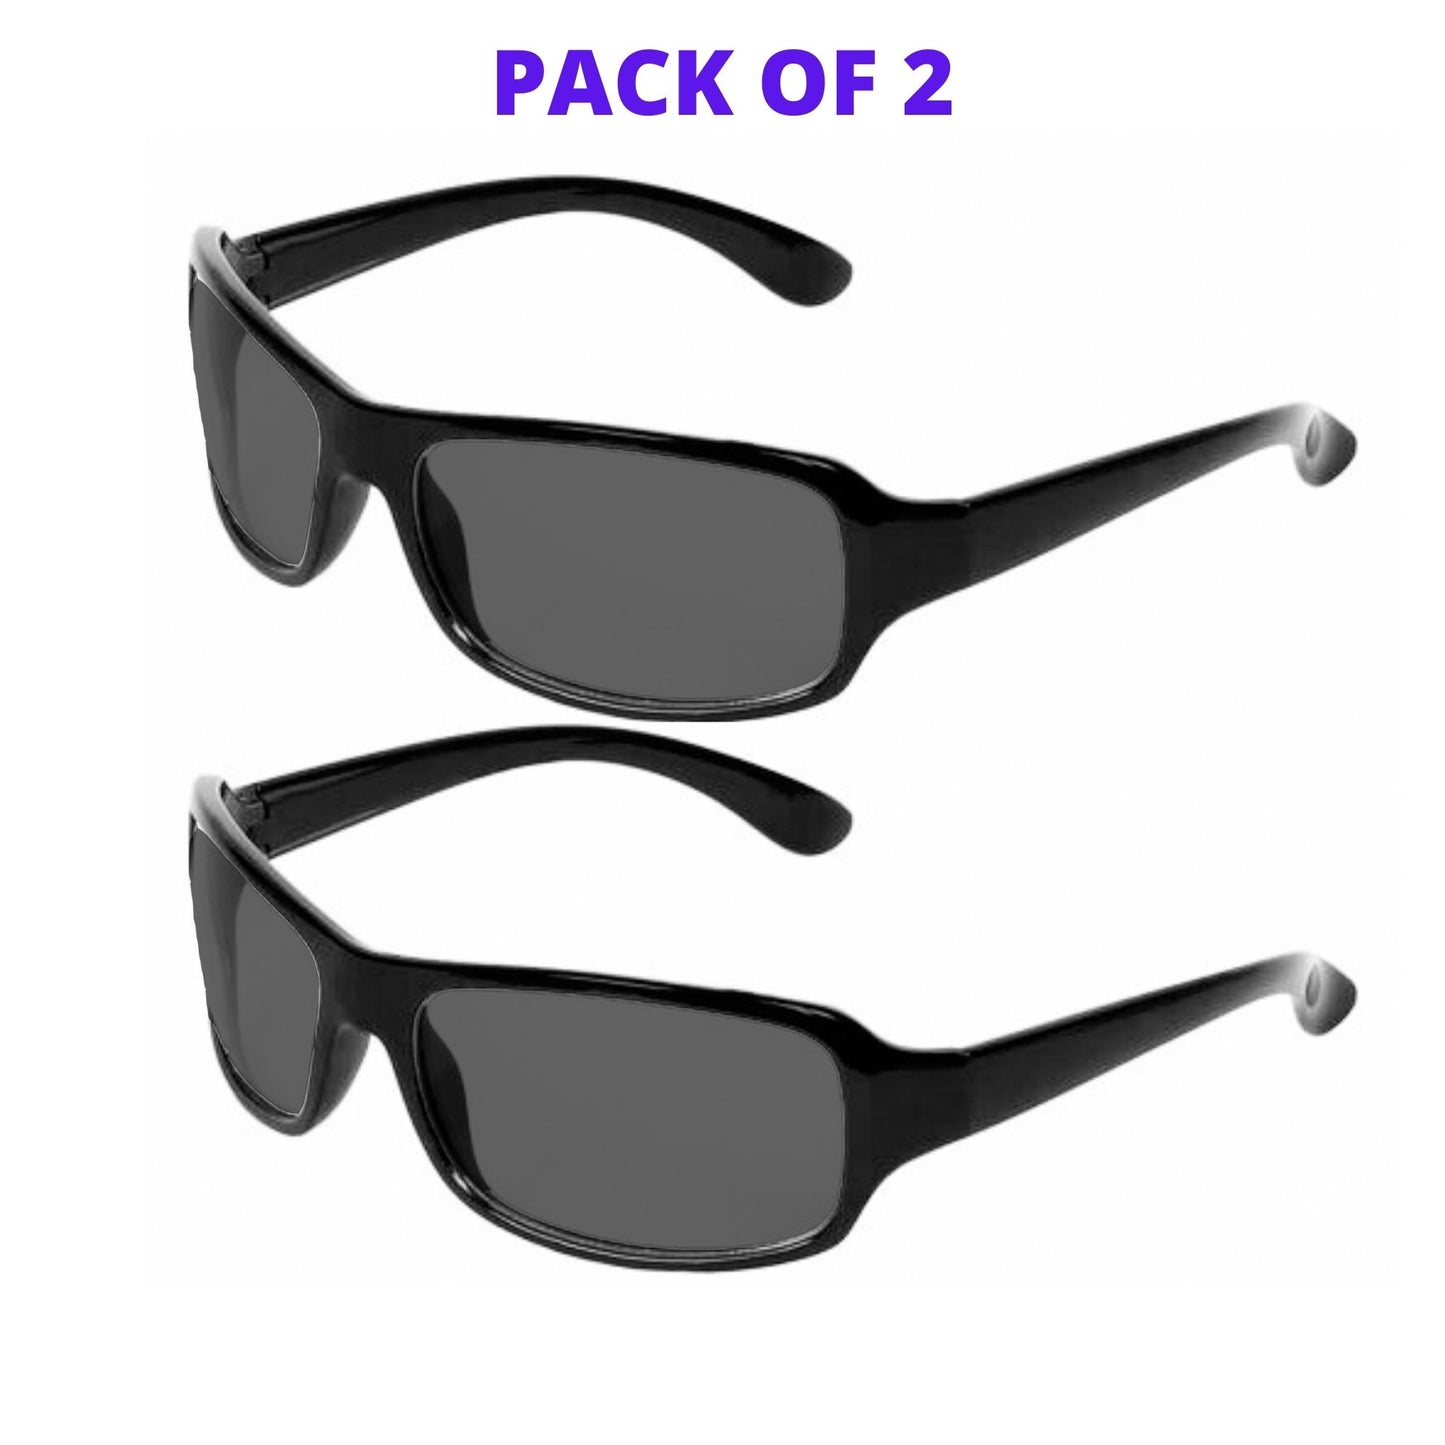 Black Sunglasses Wraparound Combo for Sports, Biking, Cricket (FT Black Pack of 2)